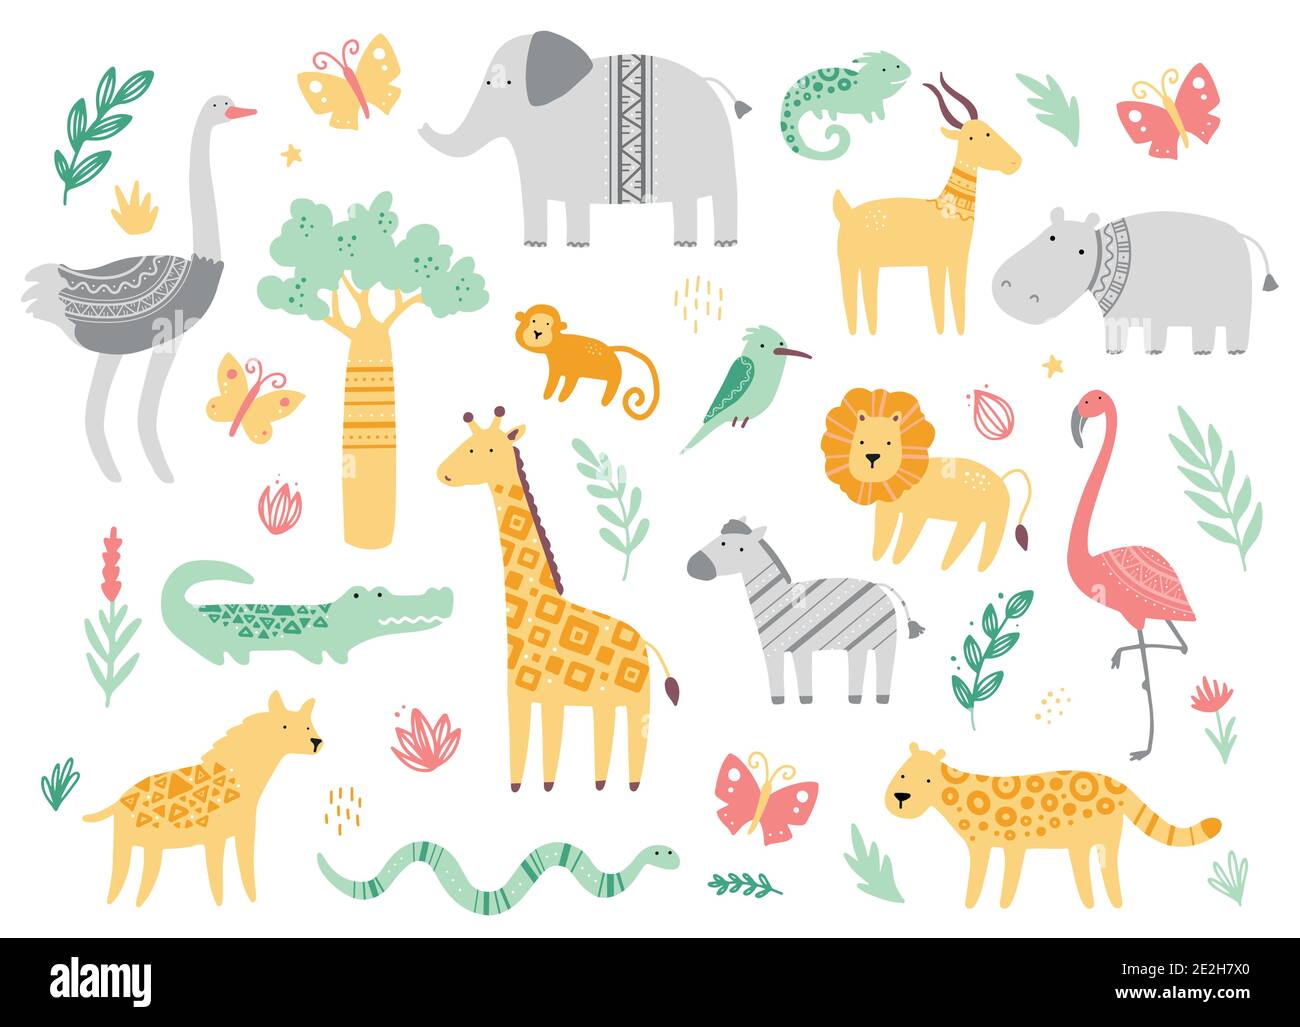 Set of cute african zoo animals giraffe, zebra, lion, bird, elephant, snake, lizard, cheetah, crocodile. Flat and simple design style for baby, children illustration. Stock Vector